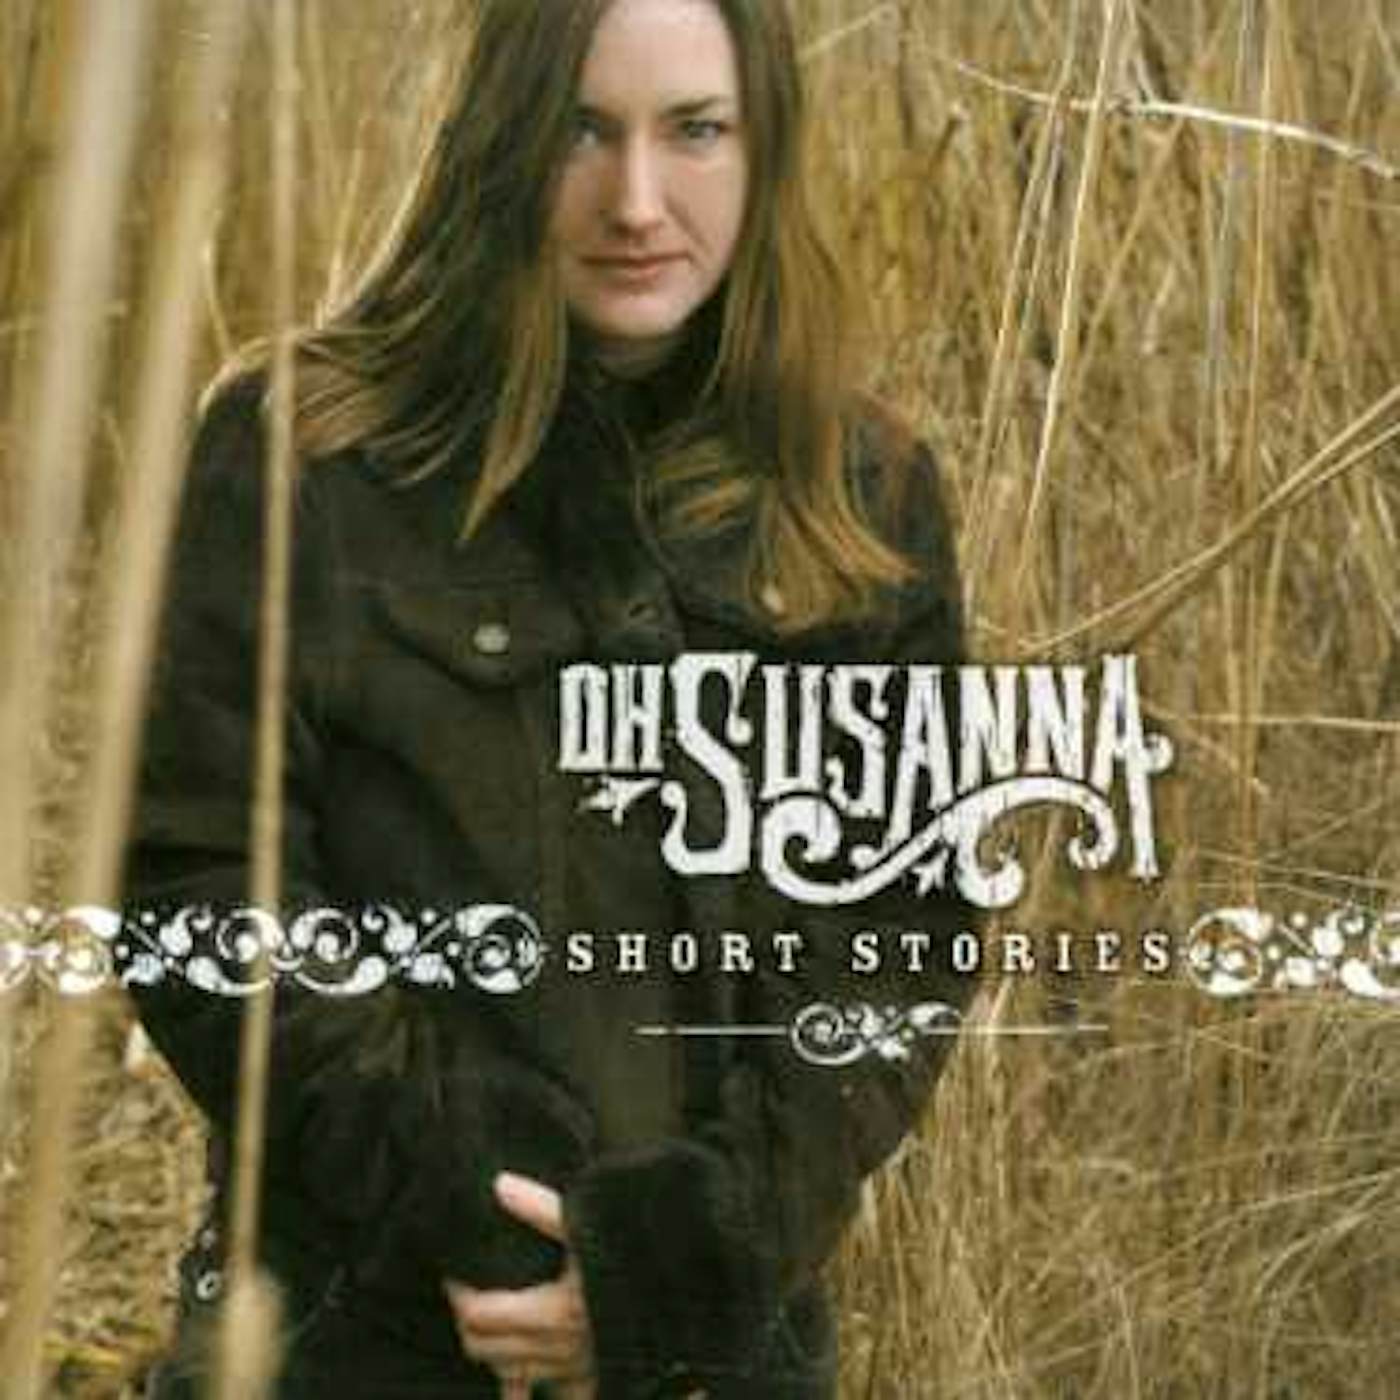 OH SUSANNA SHORT STORIES CD